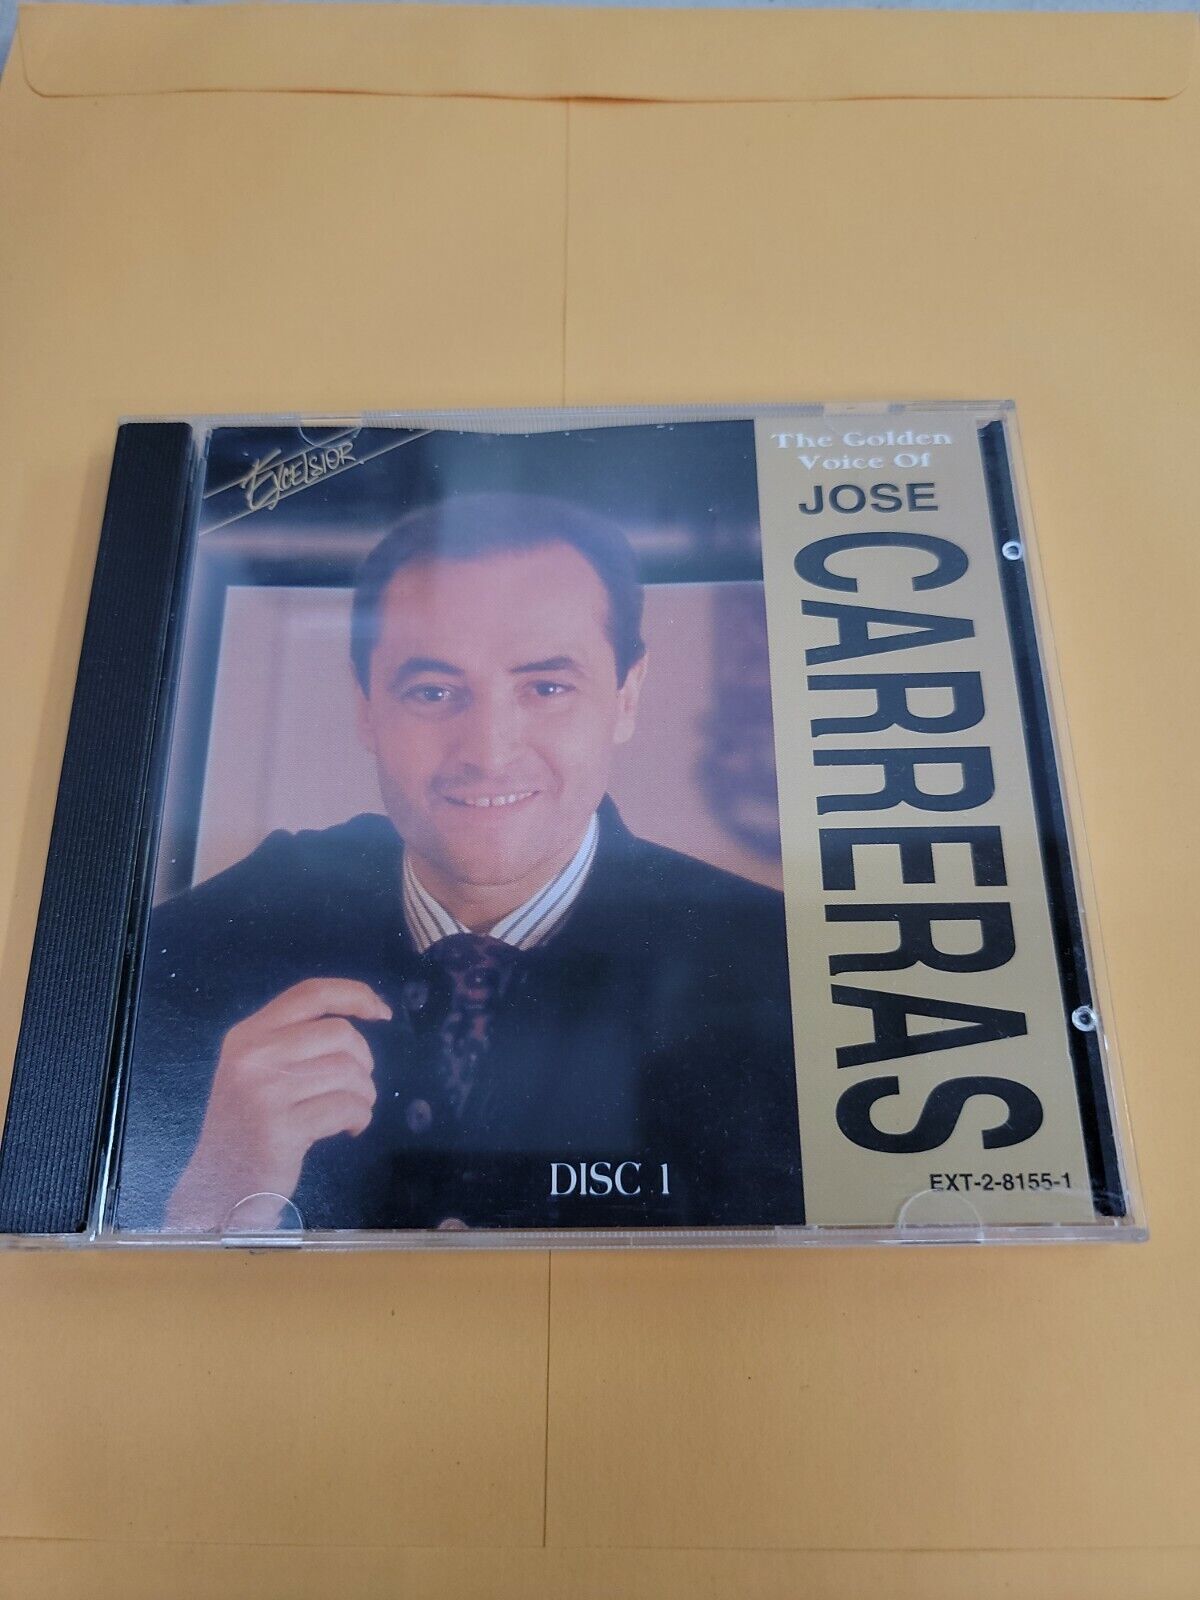 Jose Carreras : The Golden Voice of Jose Carreras (UK Import) (1CDs)